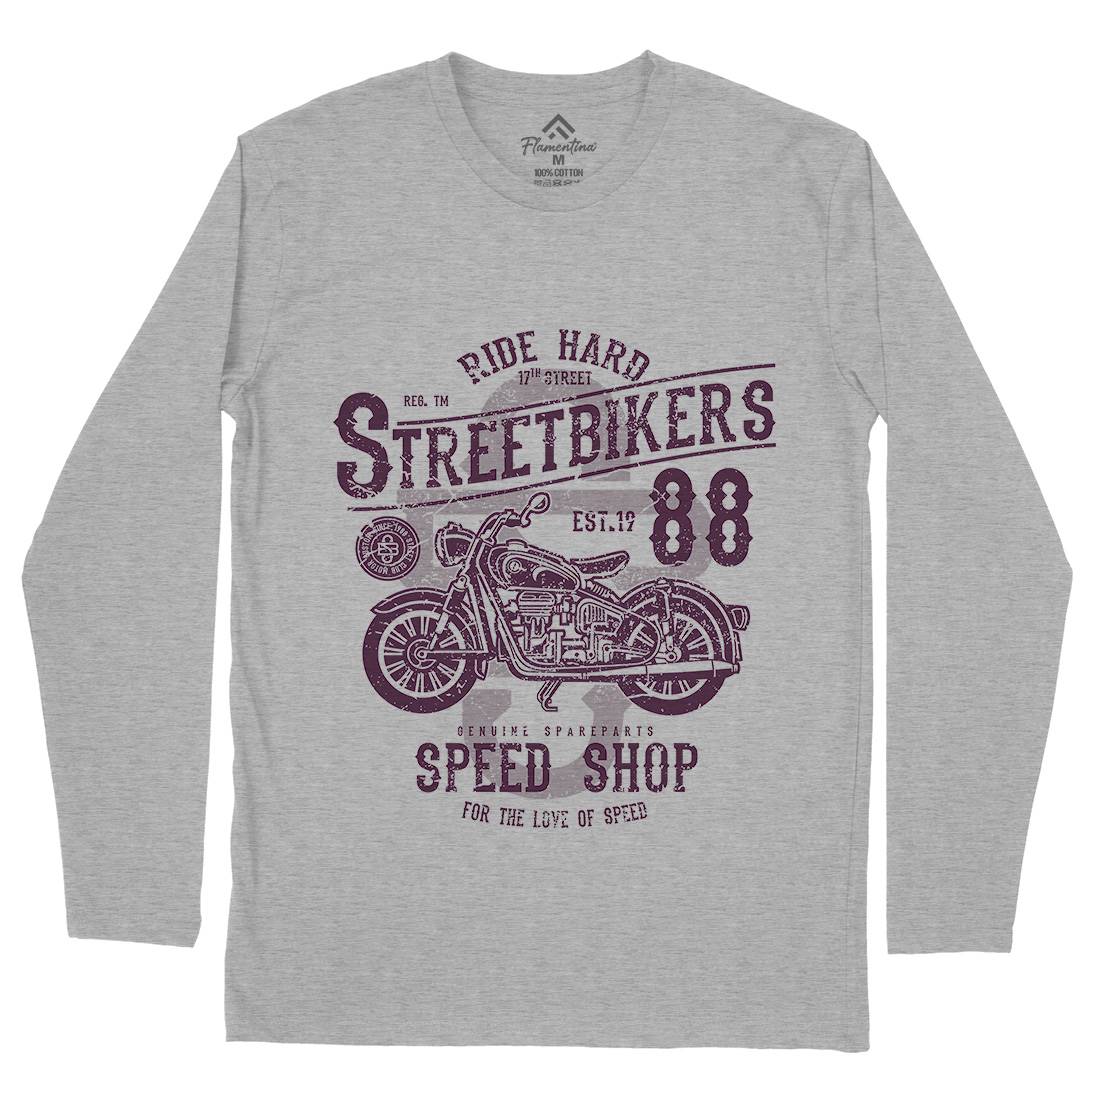 Street Bikers Mens Long Sleeve T-Shirt Motorcycles A160